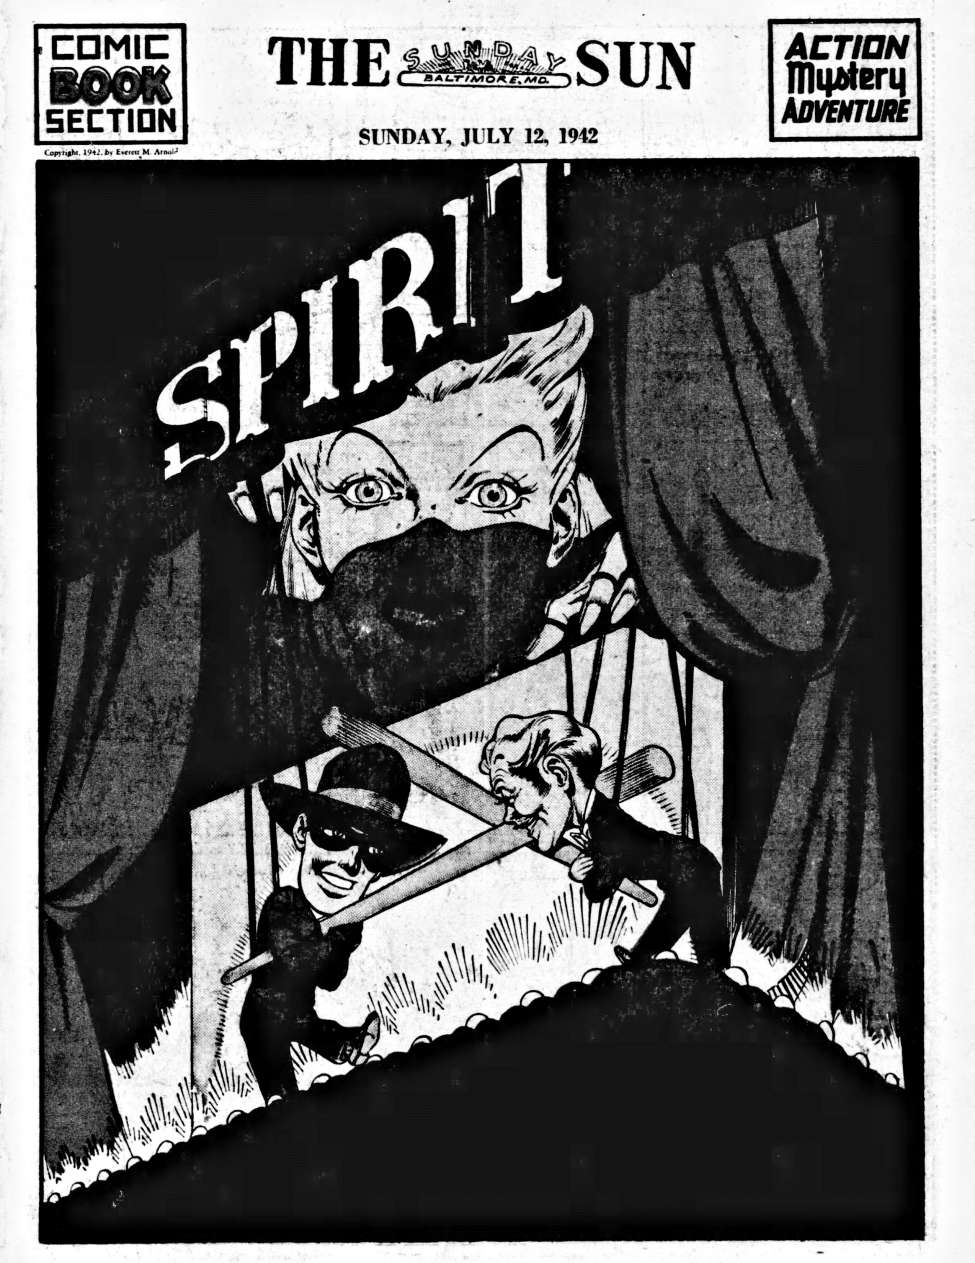 Book Cover For The Spirit (1942-07-12) - Baltimore Sun (b/w)